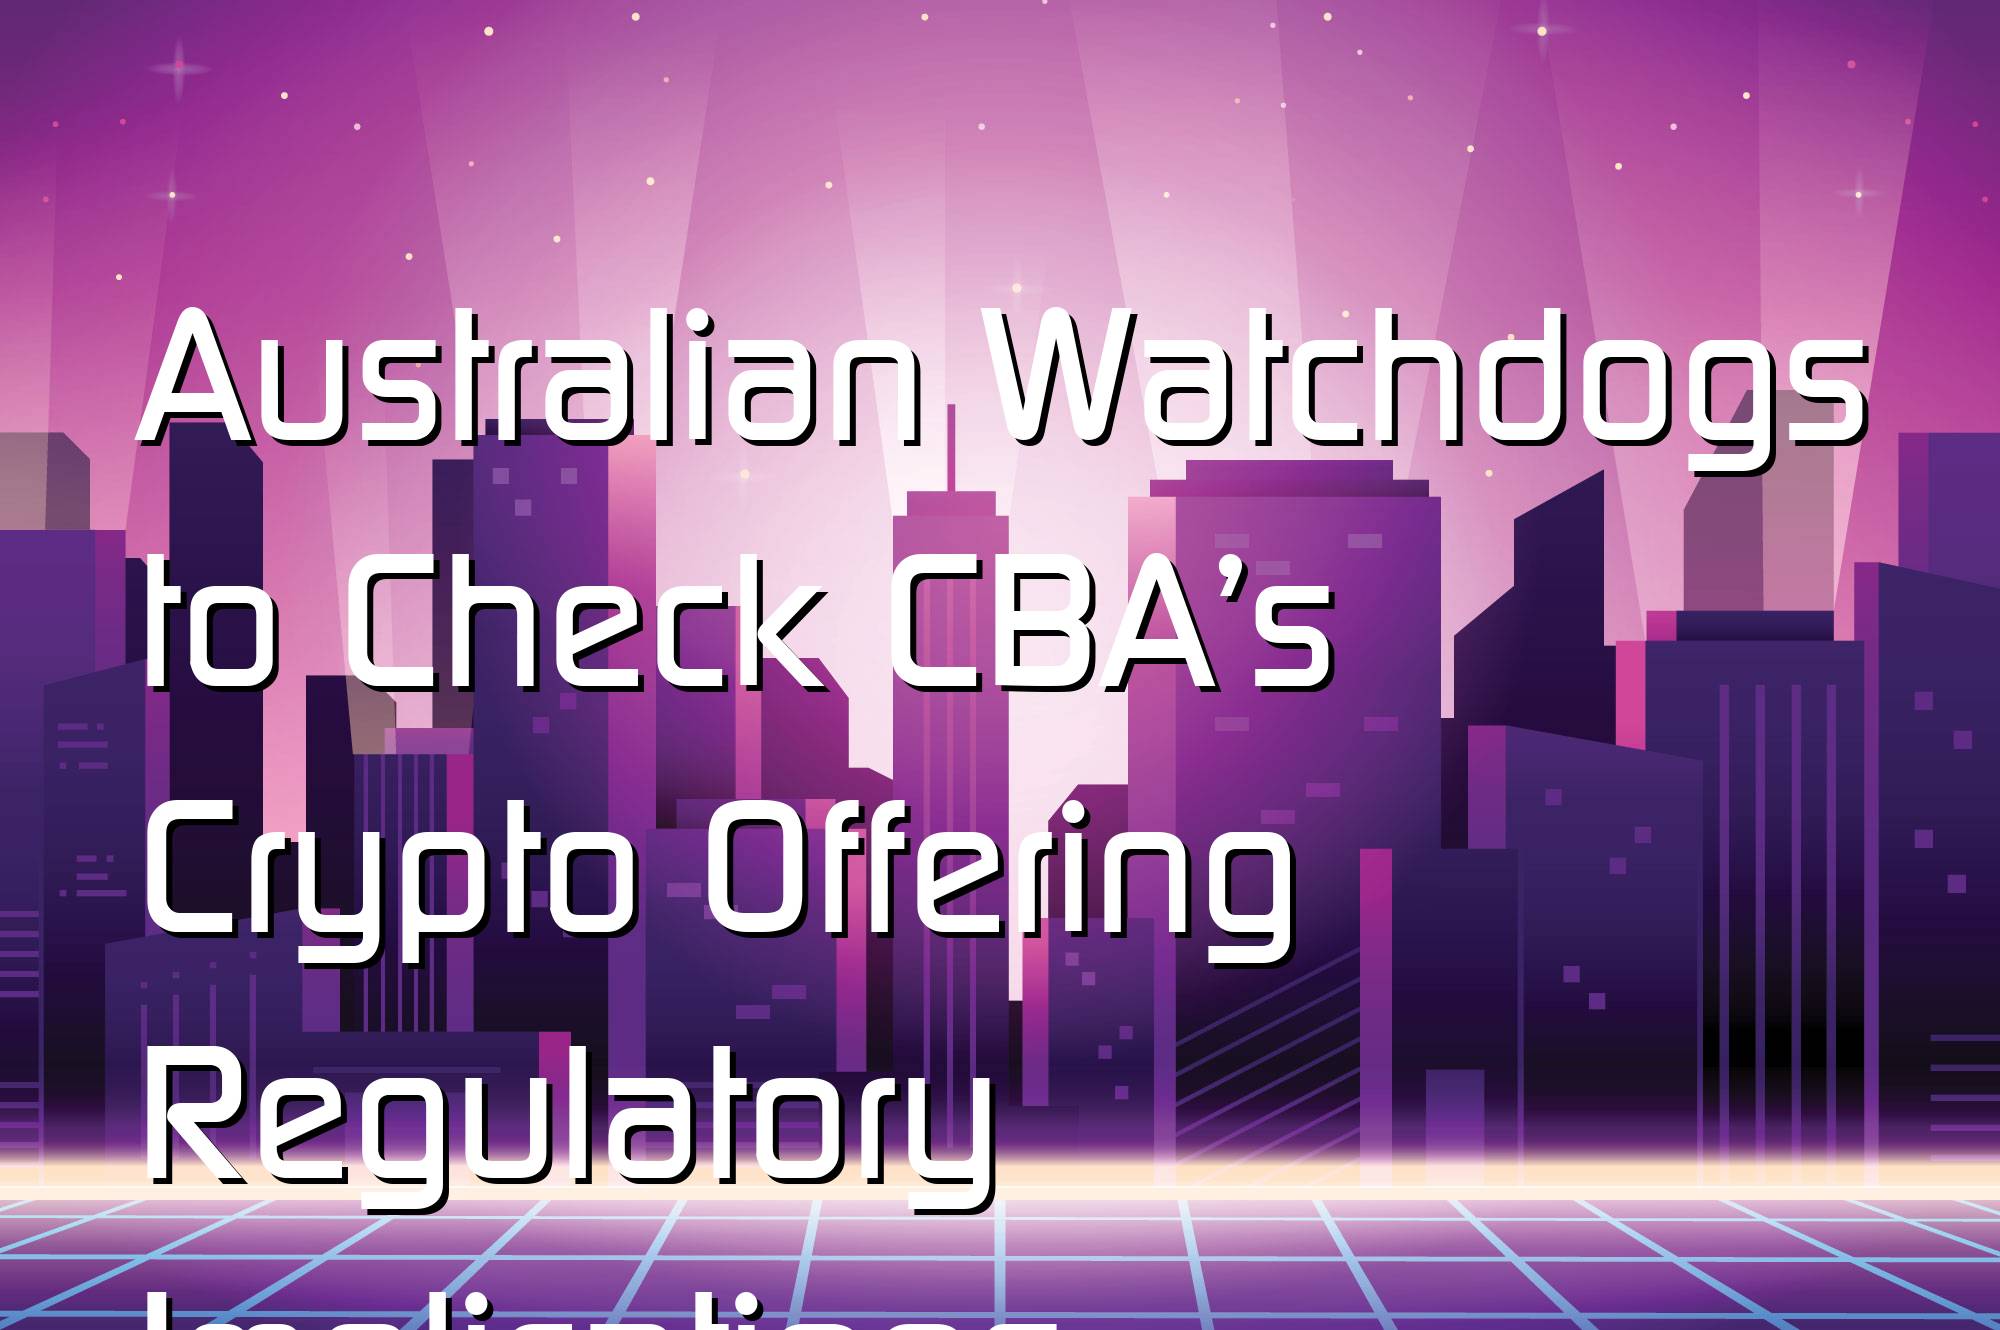 @$61027: Australian Watchdogs to Check CBA’s Crypto Offering Regulatory Implications